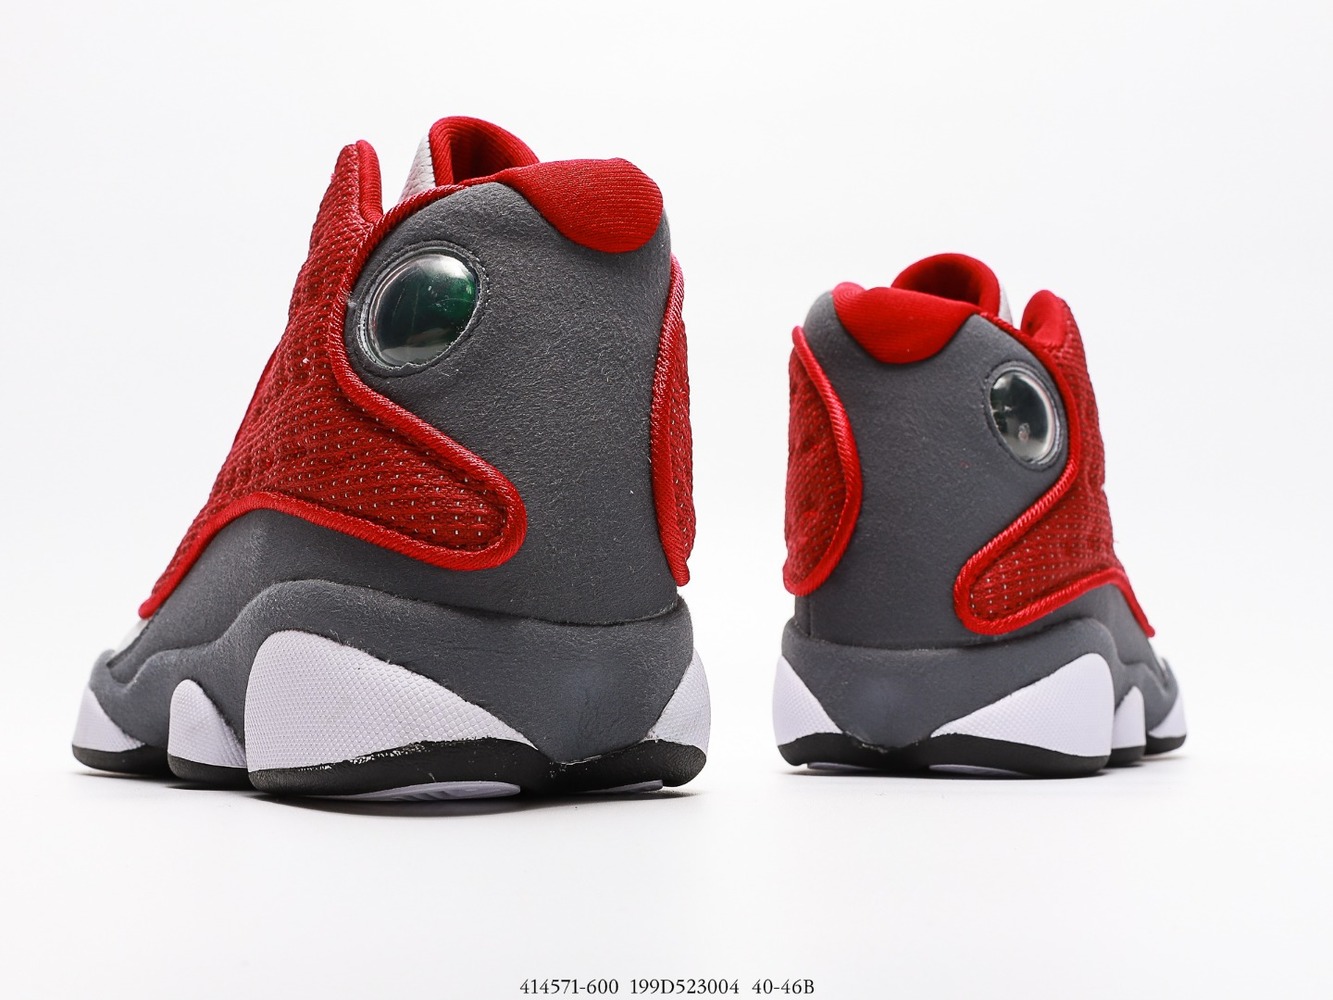 Air Jordan 13 Retro
Gym Red Flint Grey (PS)  414571-600